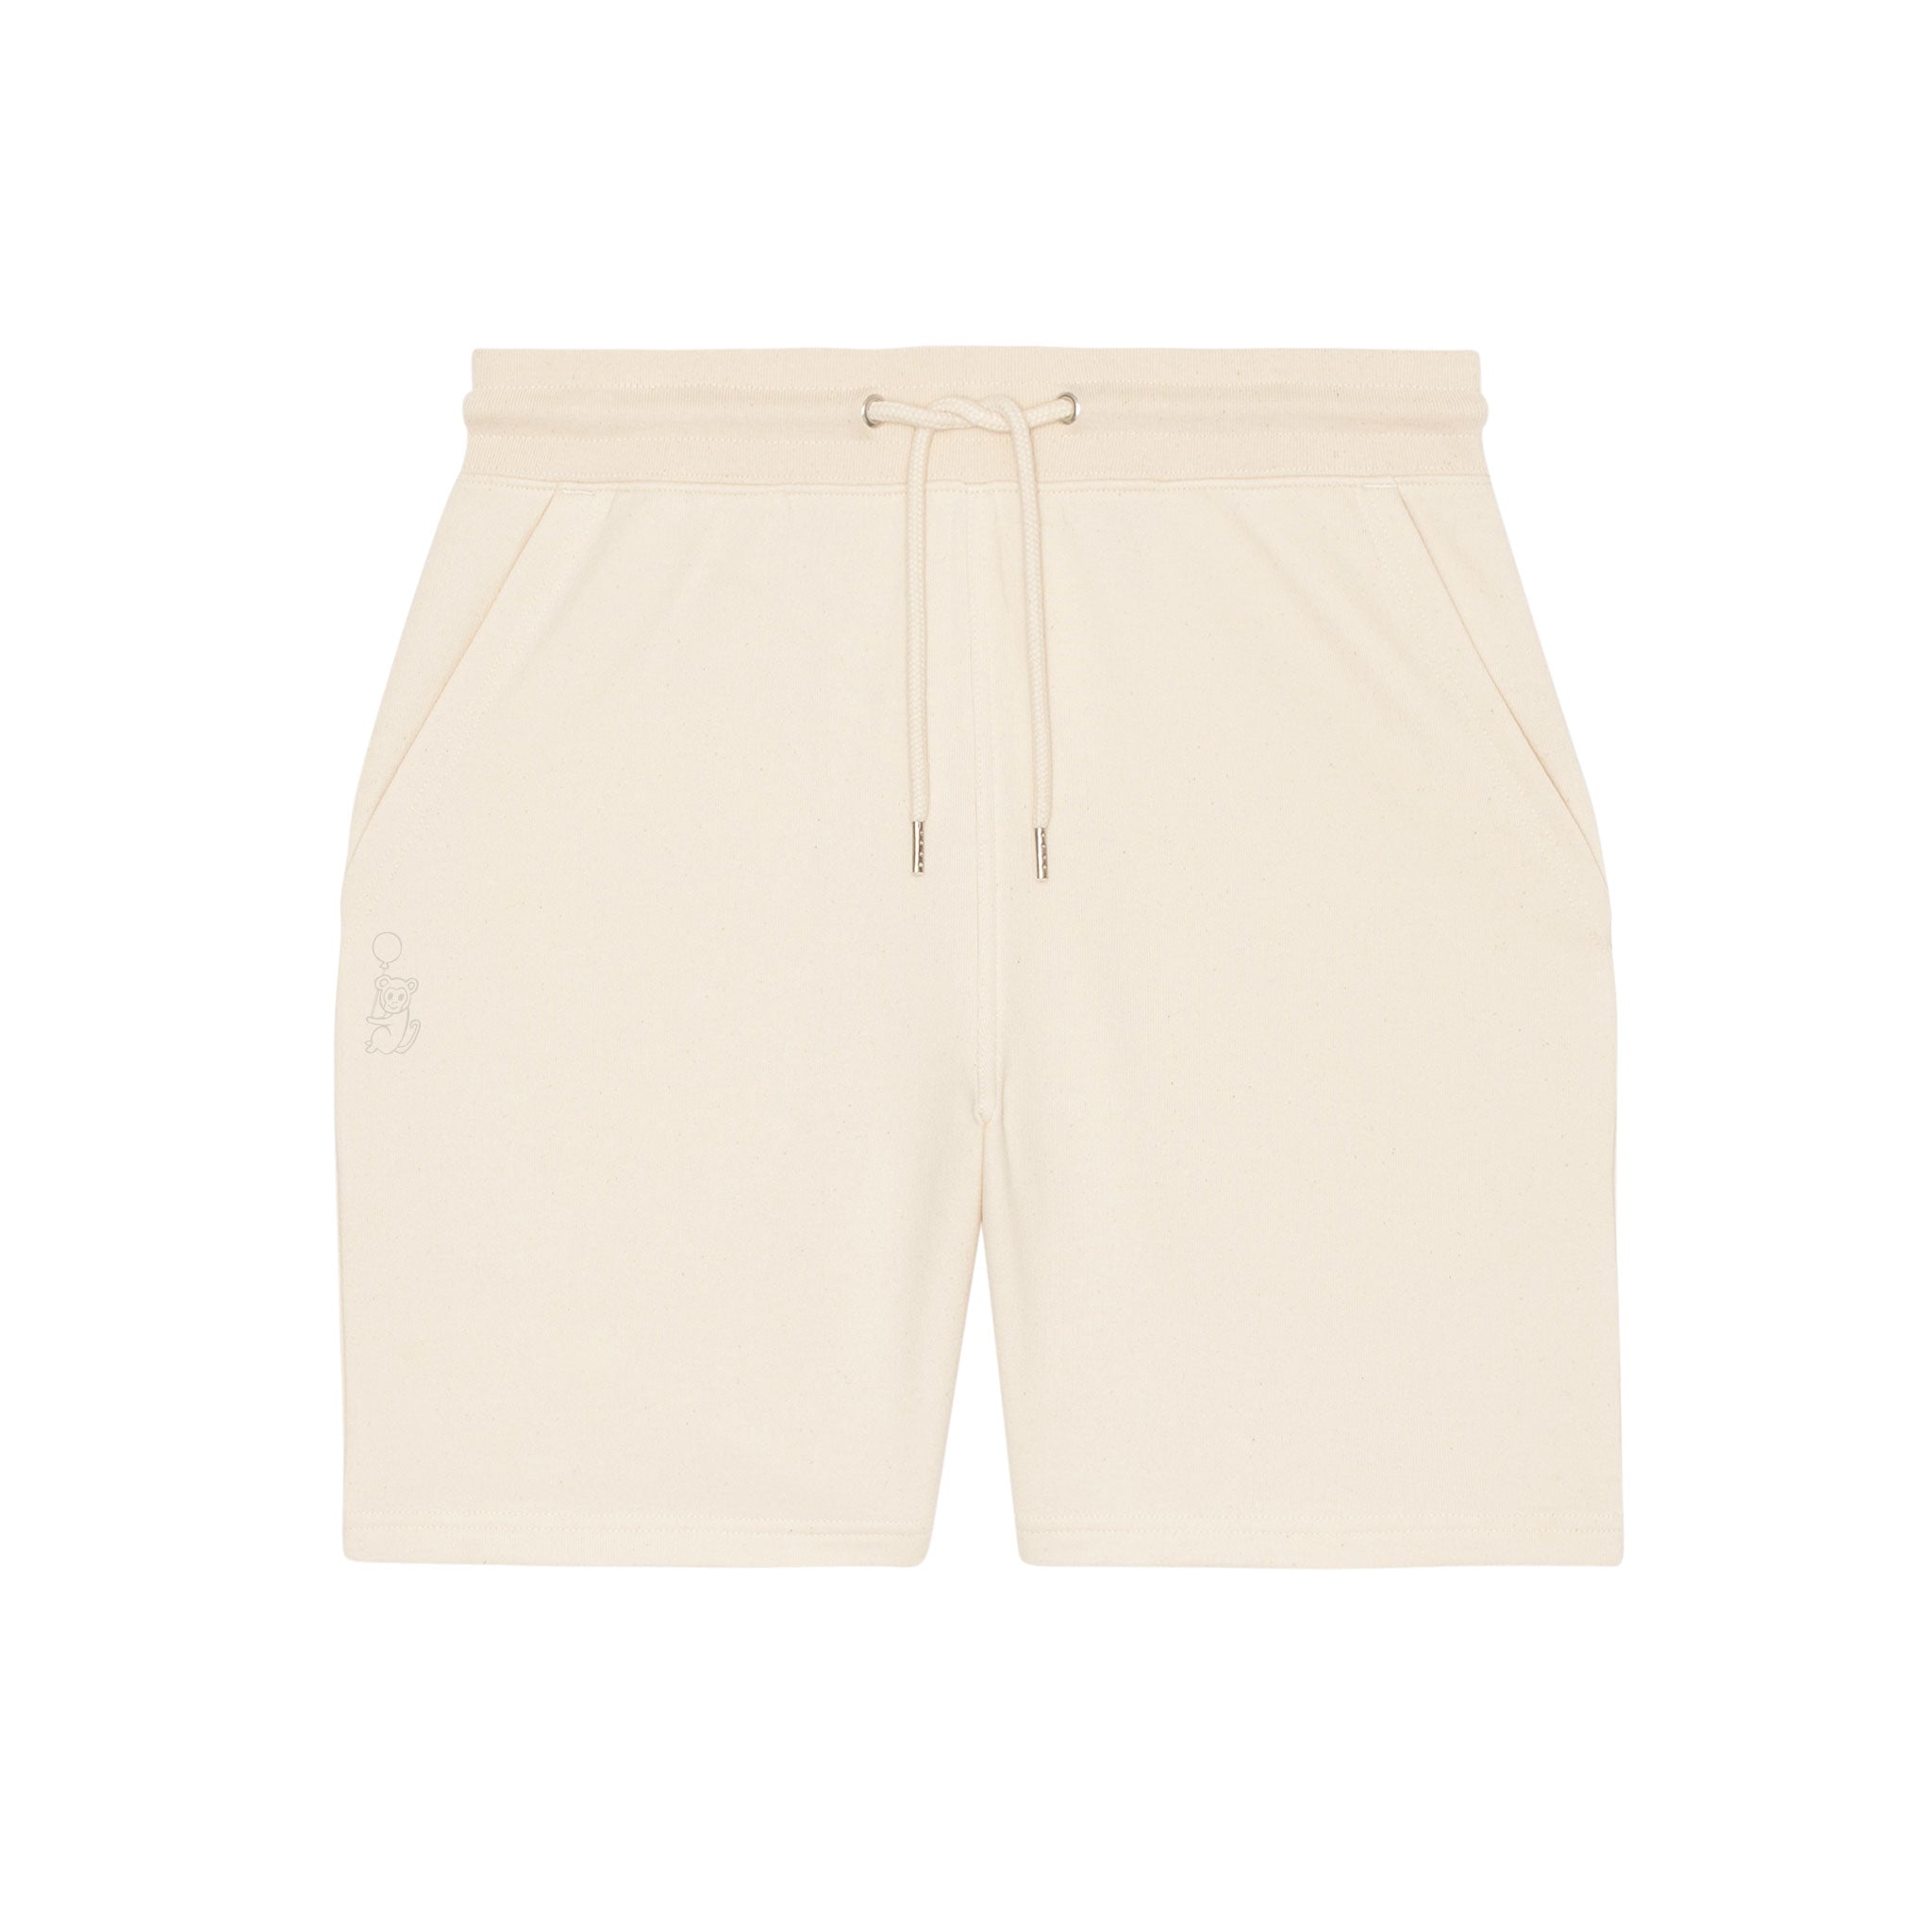 Juan Carlos - Dusty white Shorts